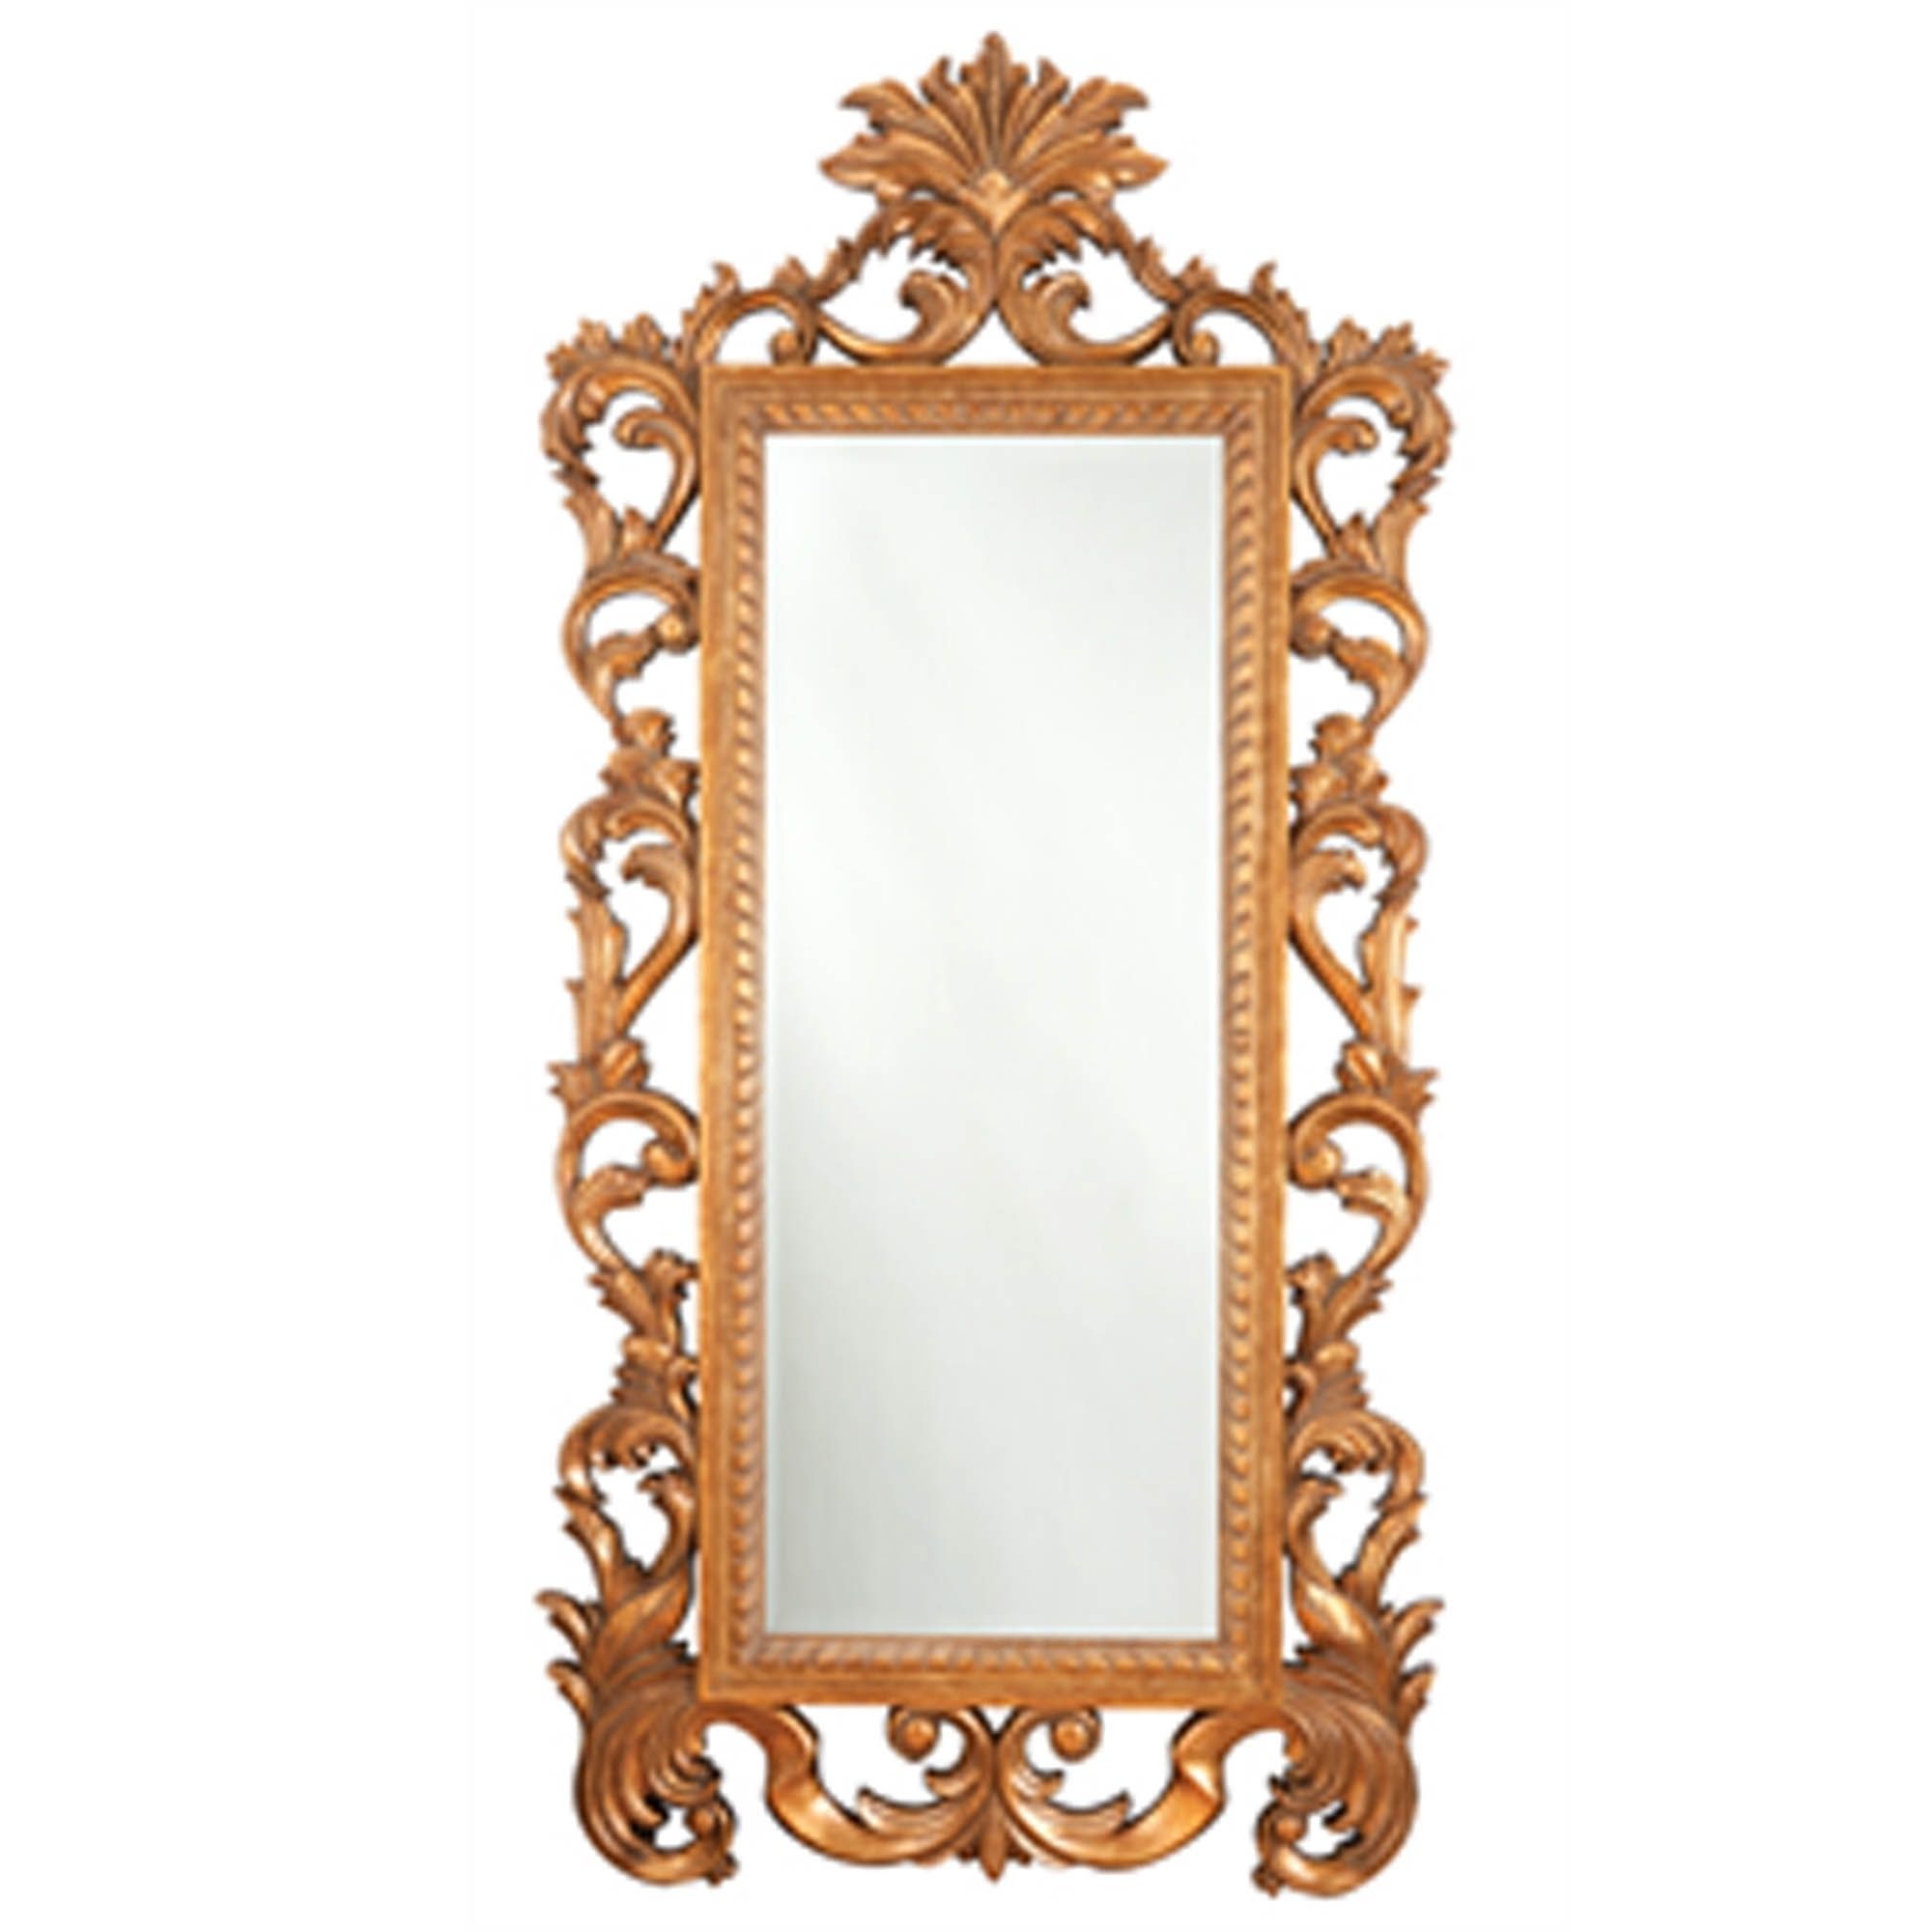 Gold Antique French Style Rectangular Ornate Wall Mirror | Hd365 Regarding Dark Gold Rectangular Wall Mirrors (View 8 of 15)